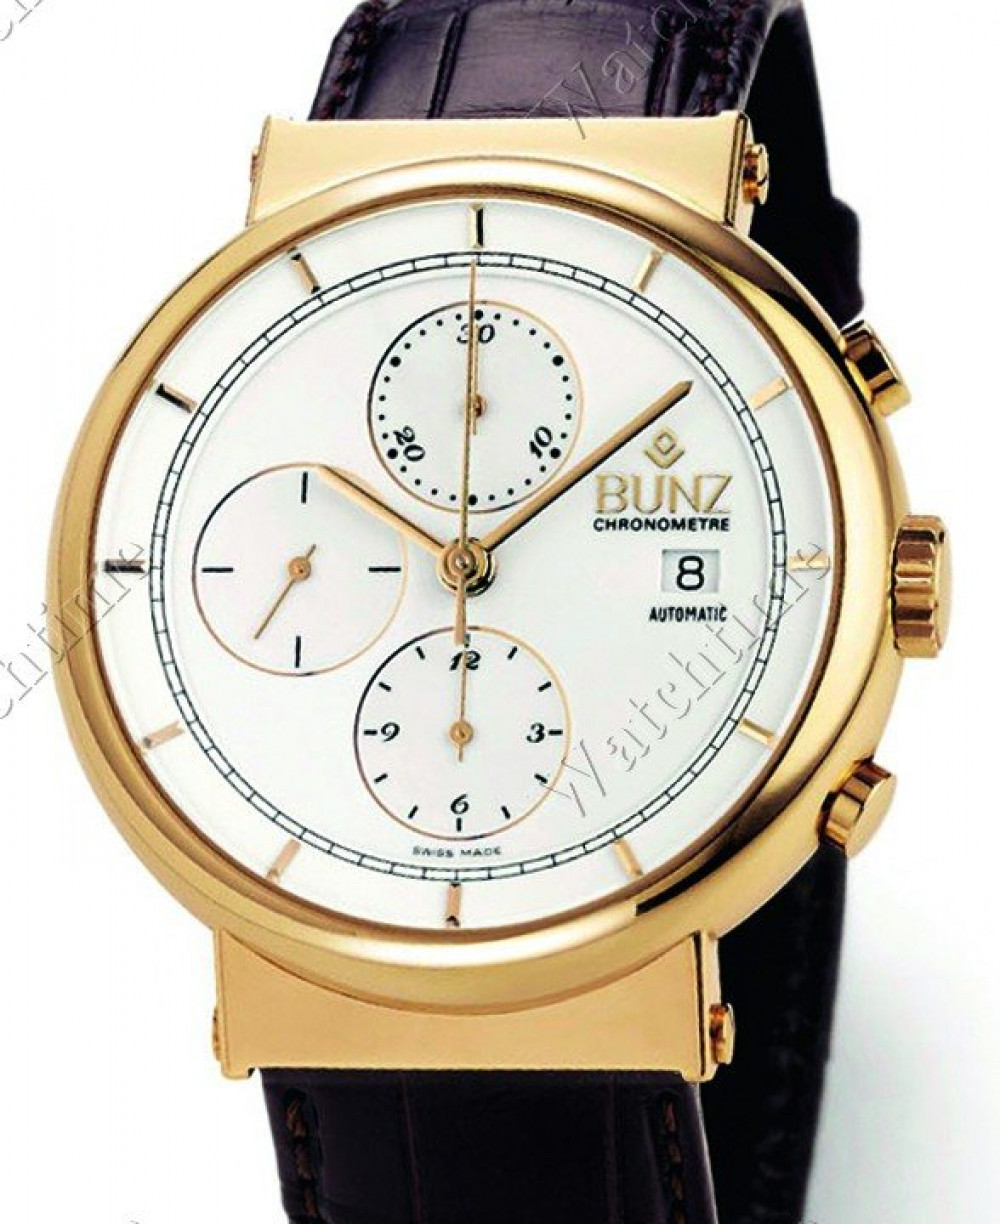 Zegarek firmy Bunz, model Chronograph